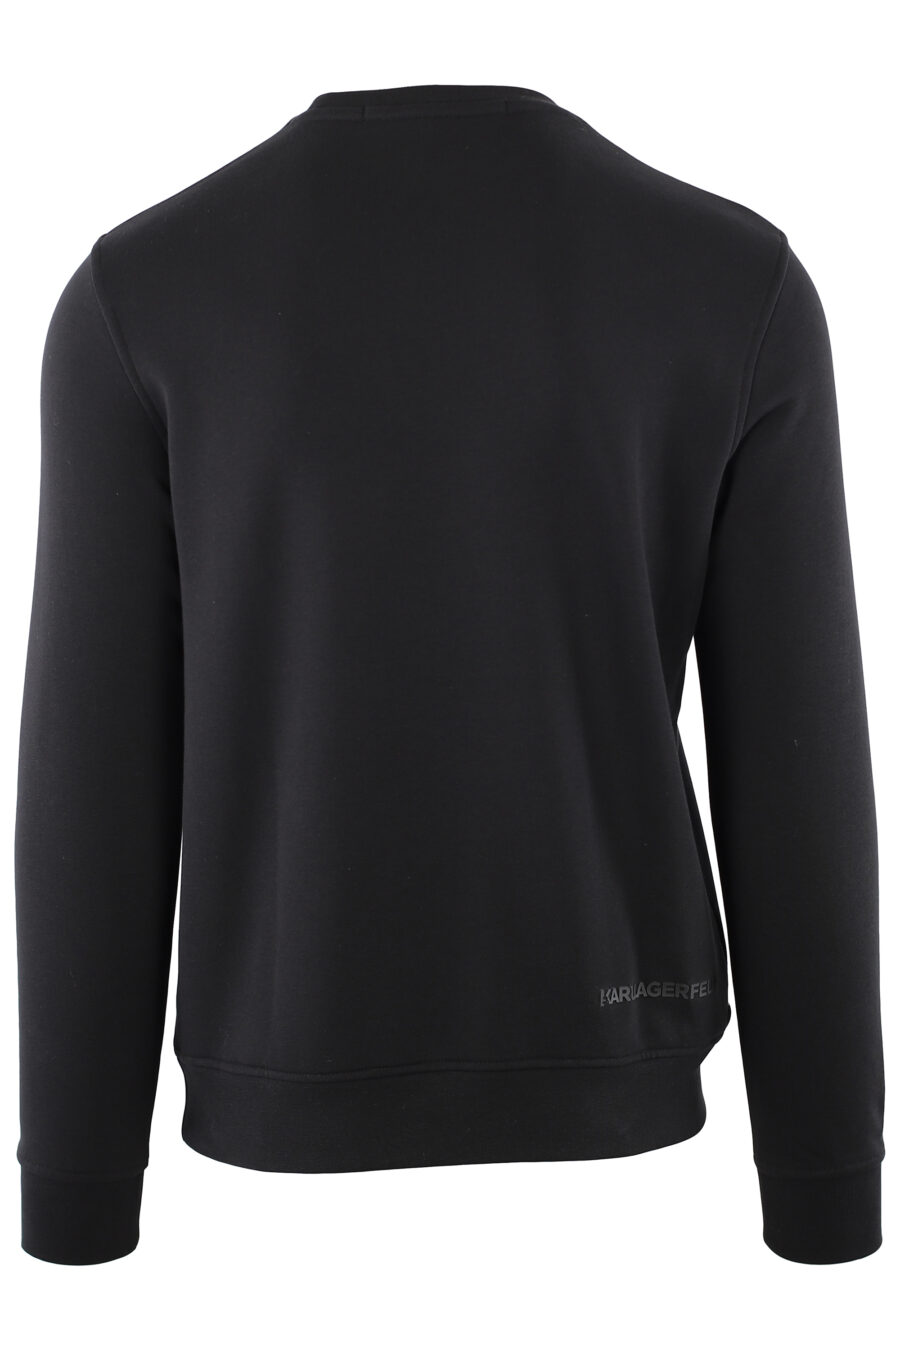 Black sweatshirt with fuchsia maxi logo - IMG 7447